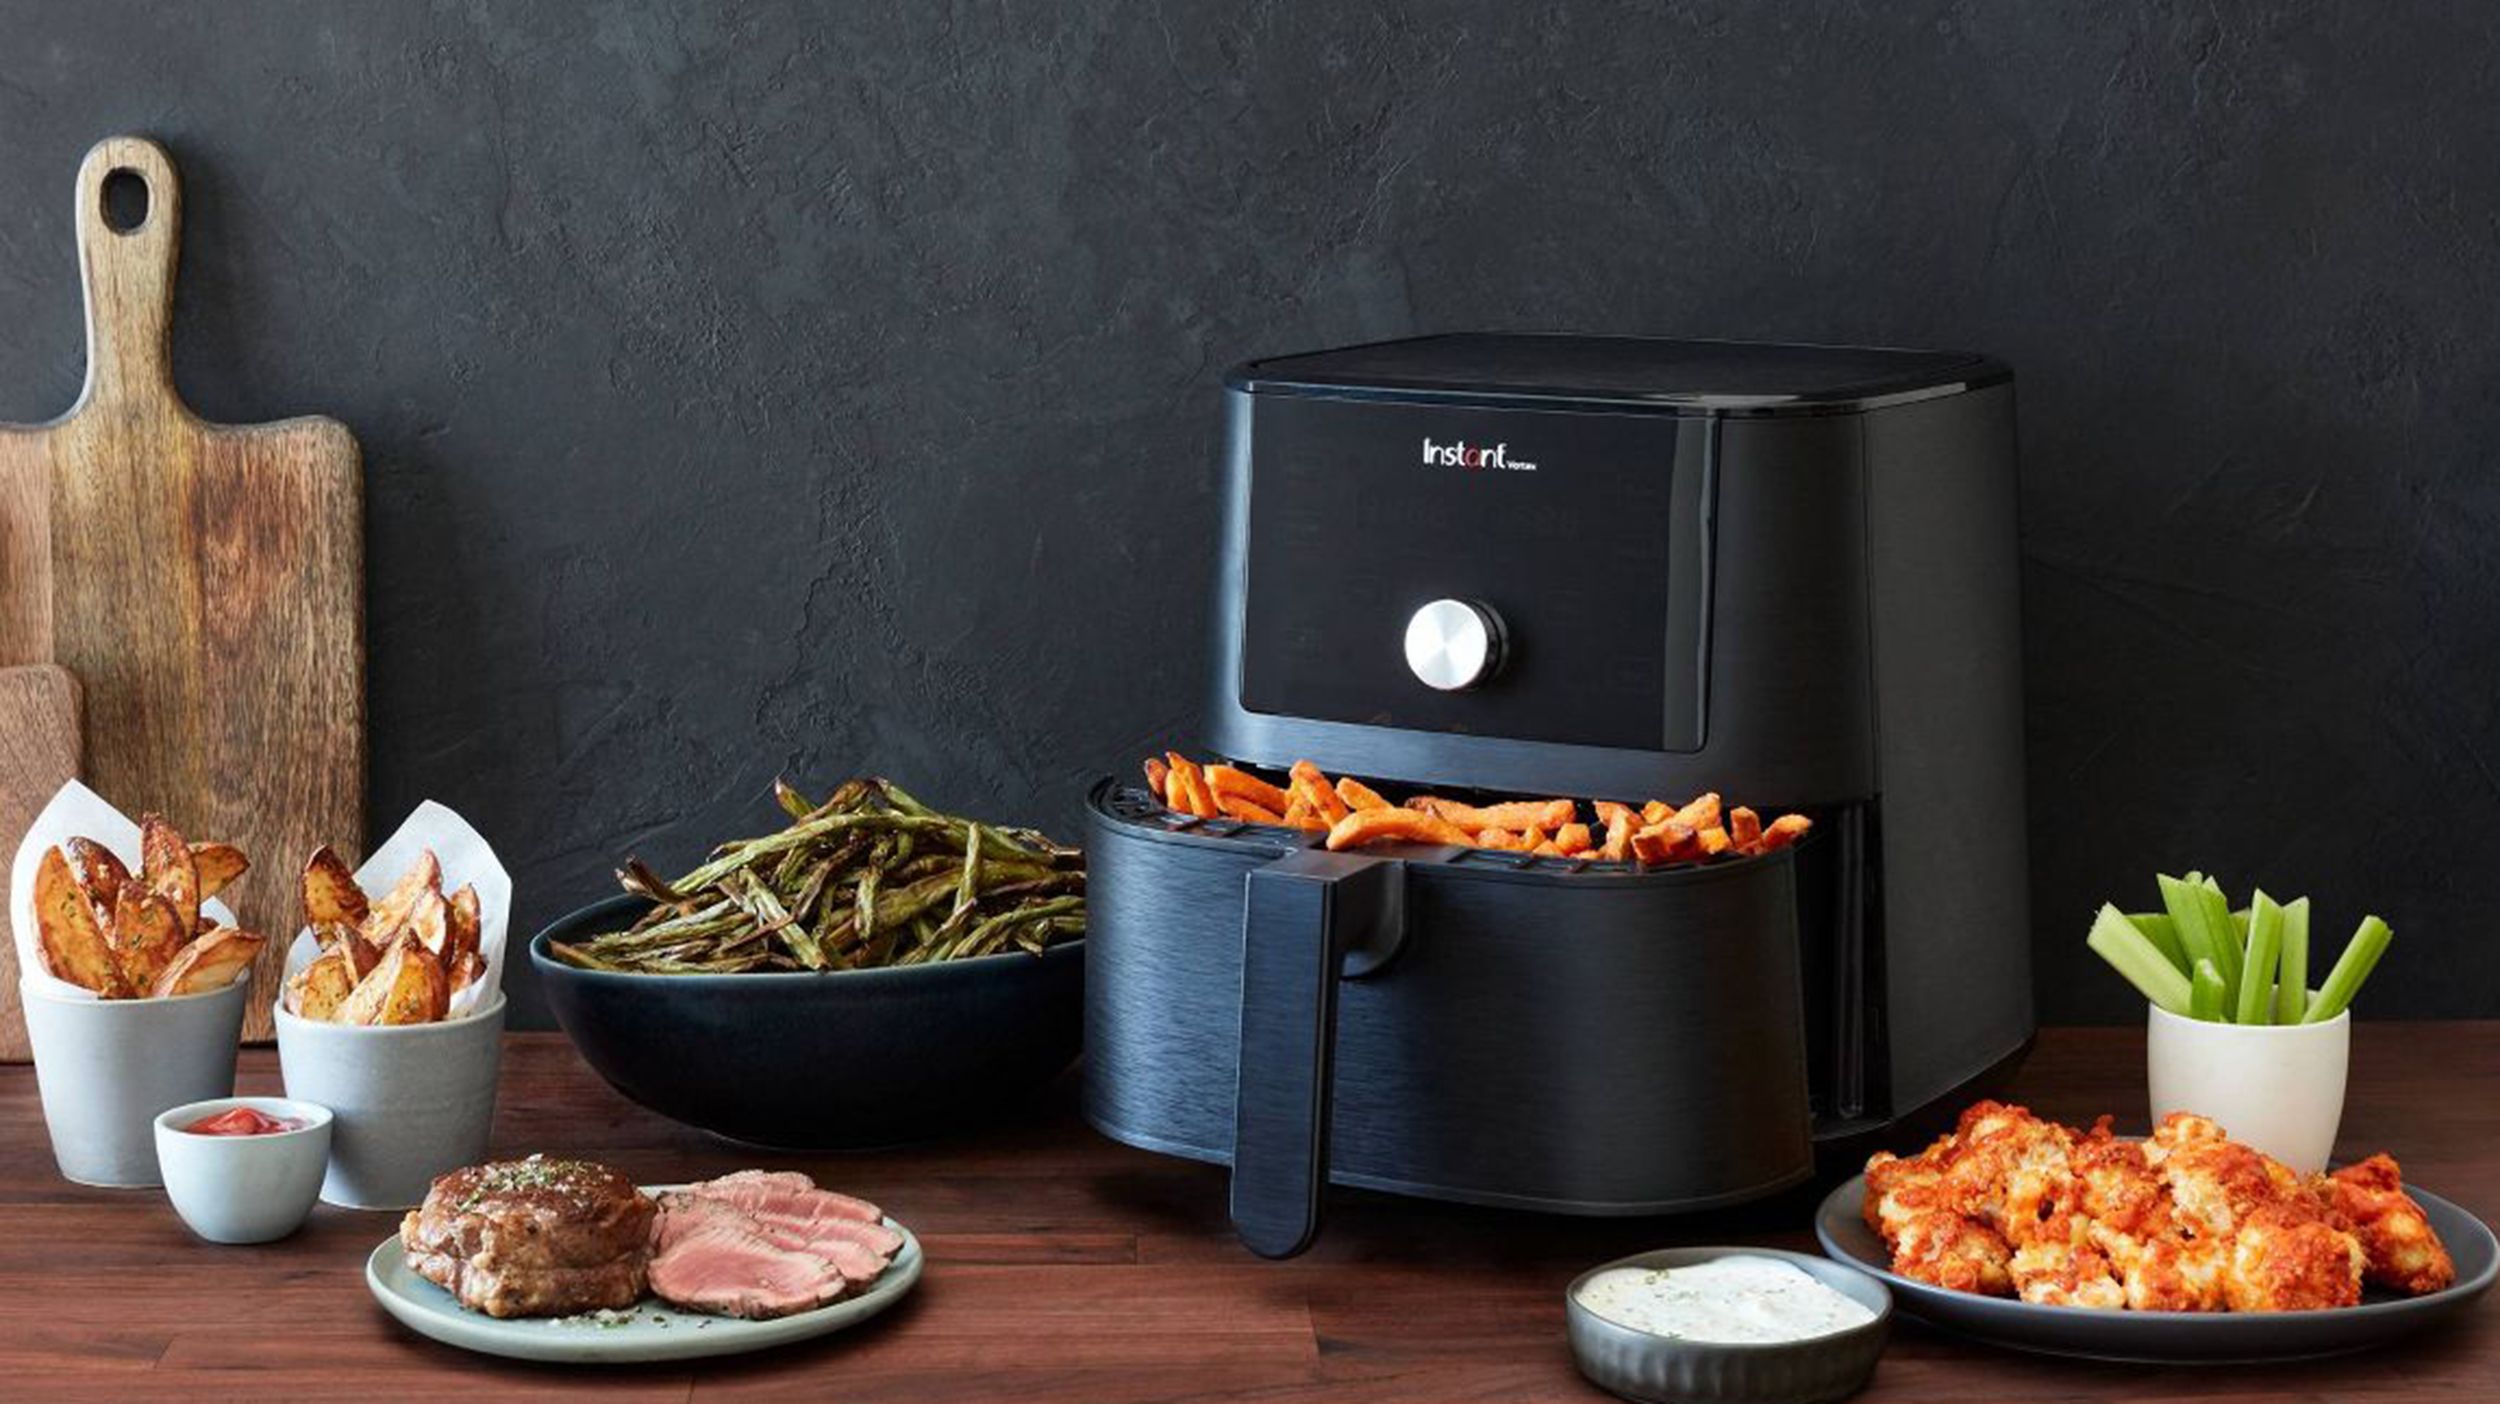 Instant Pot 26-Liter, Omni Plus 11-in-1 Air Fryer Toaster Oven